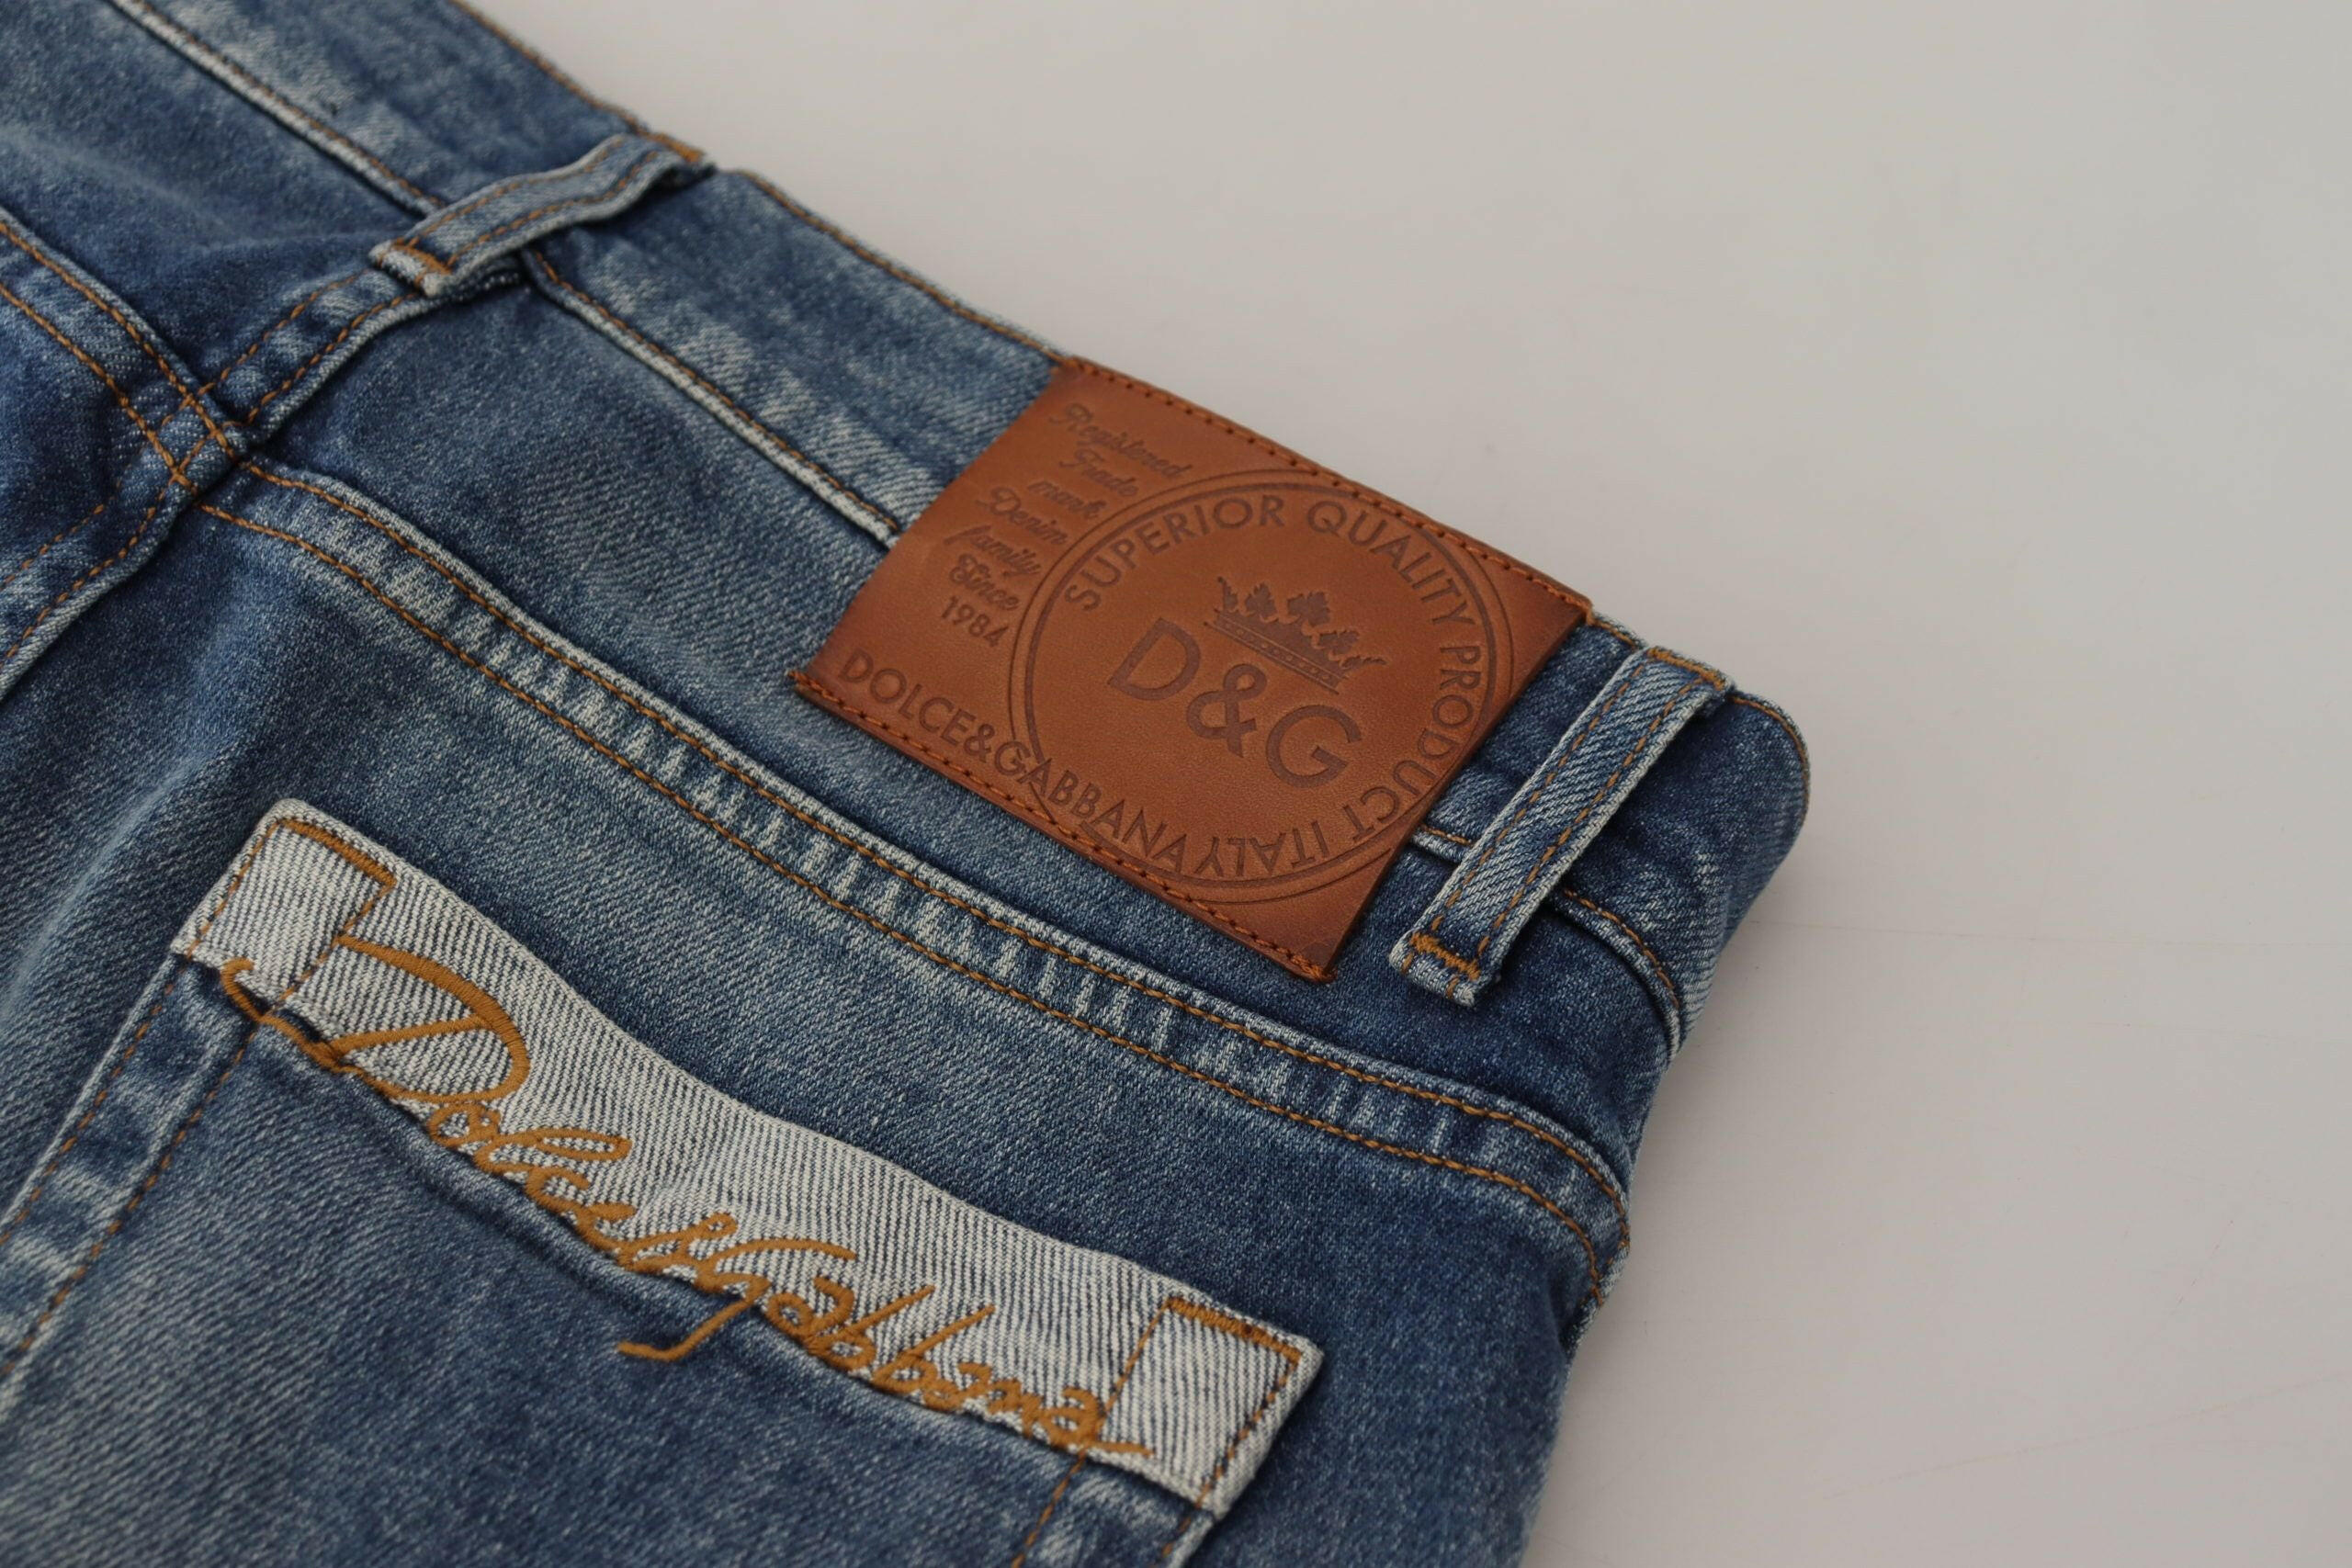 Dolce & Gabbana Blue Wash Cotton Stretch Skinny Denim Jeans - GENUINE AUTHENTIC BRAND LLC  